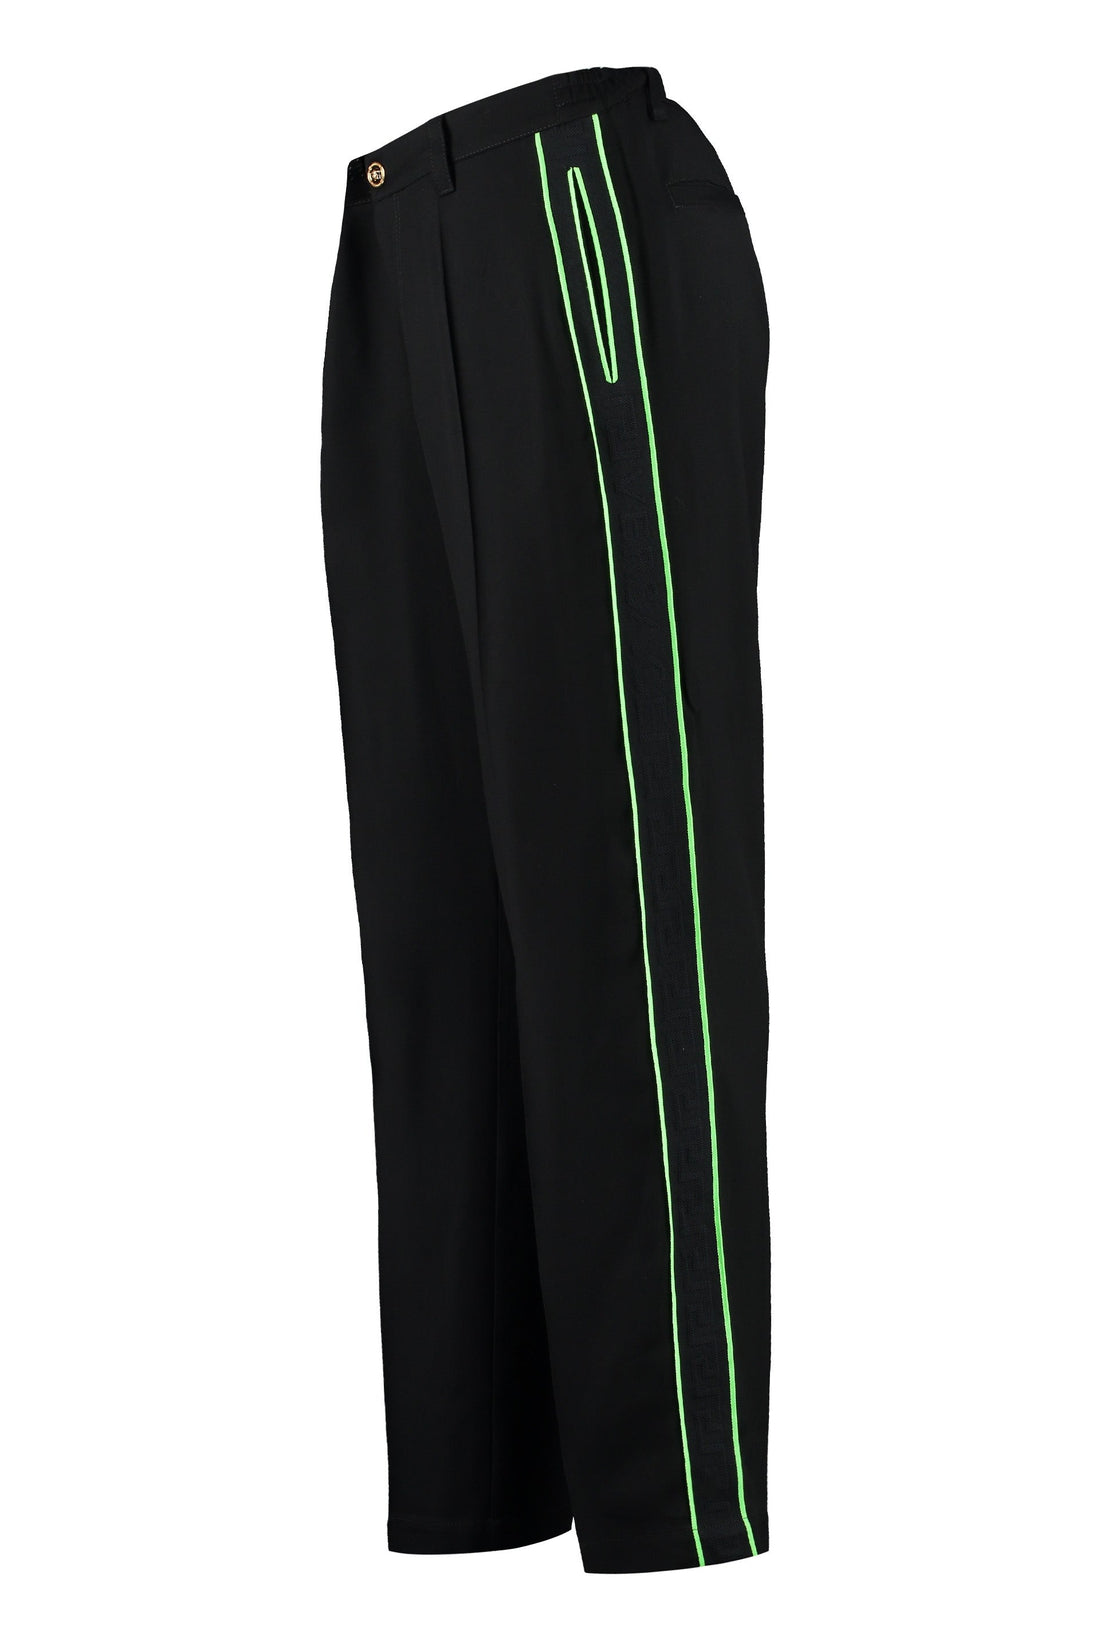 Versace-OUTLET-SALE-Logoed side stripes track-pants-ARCHIVIST